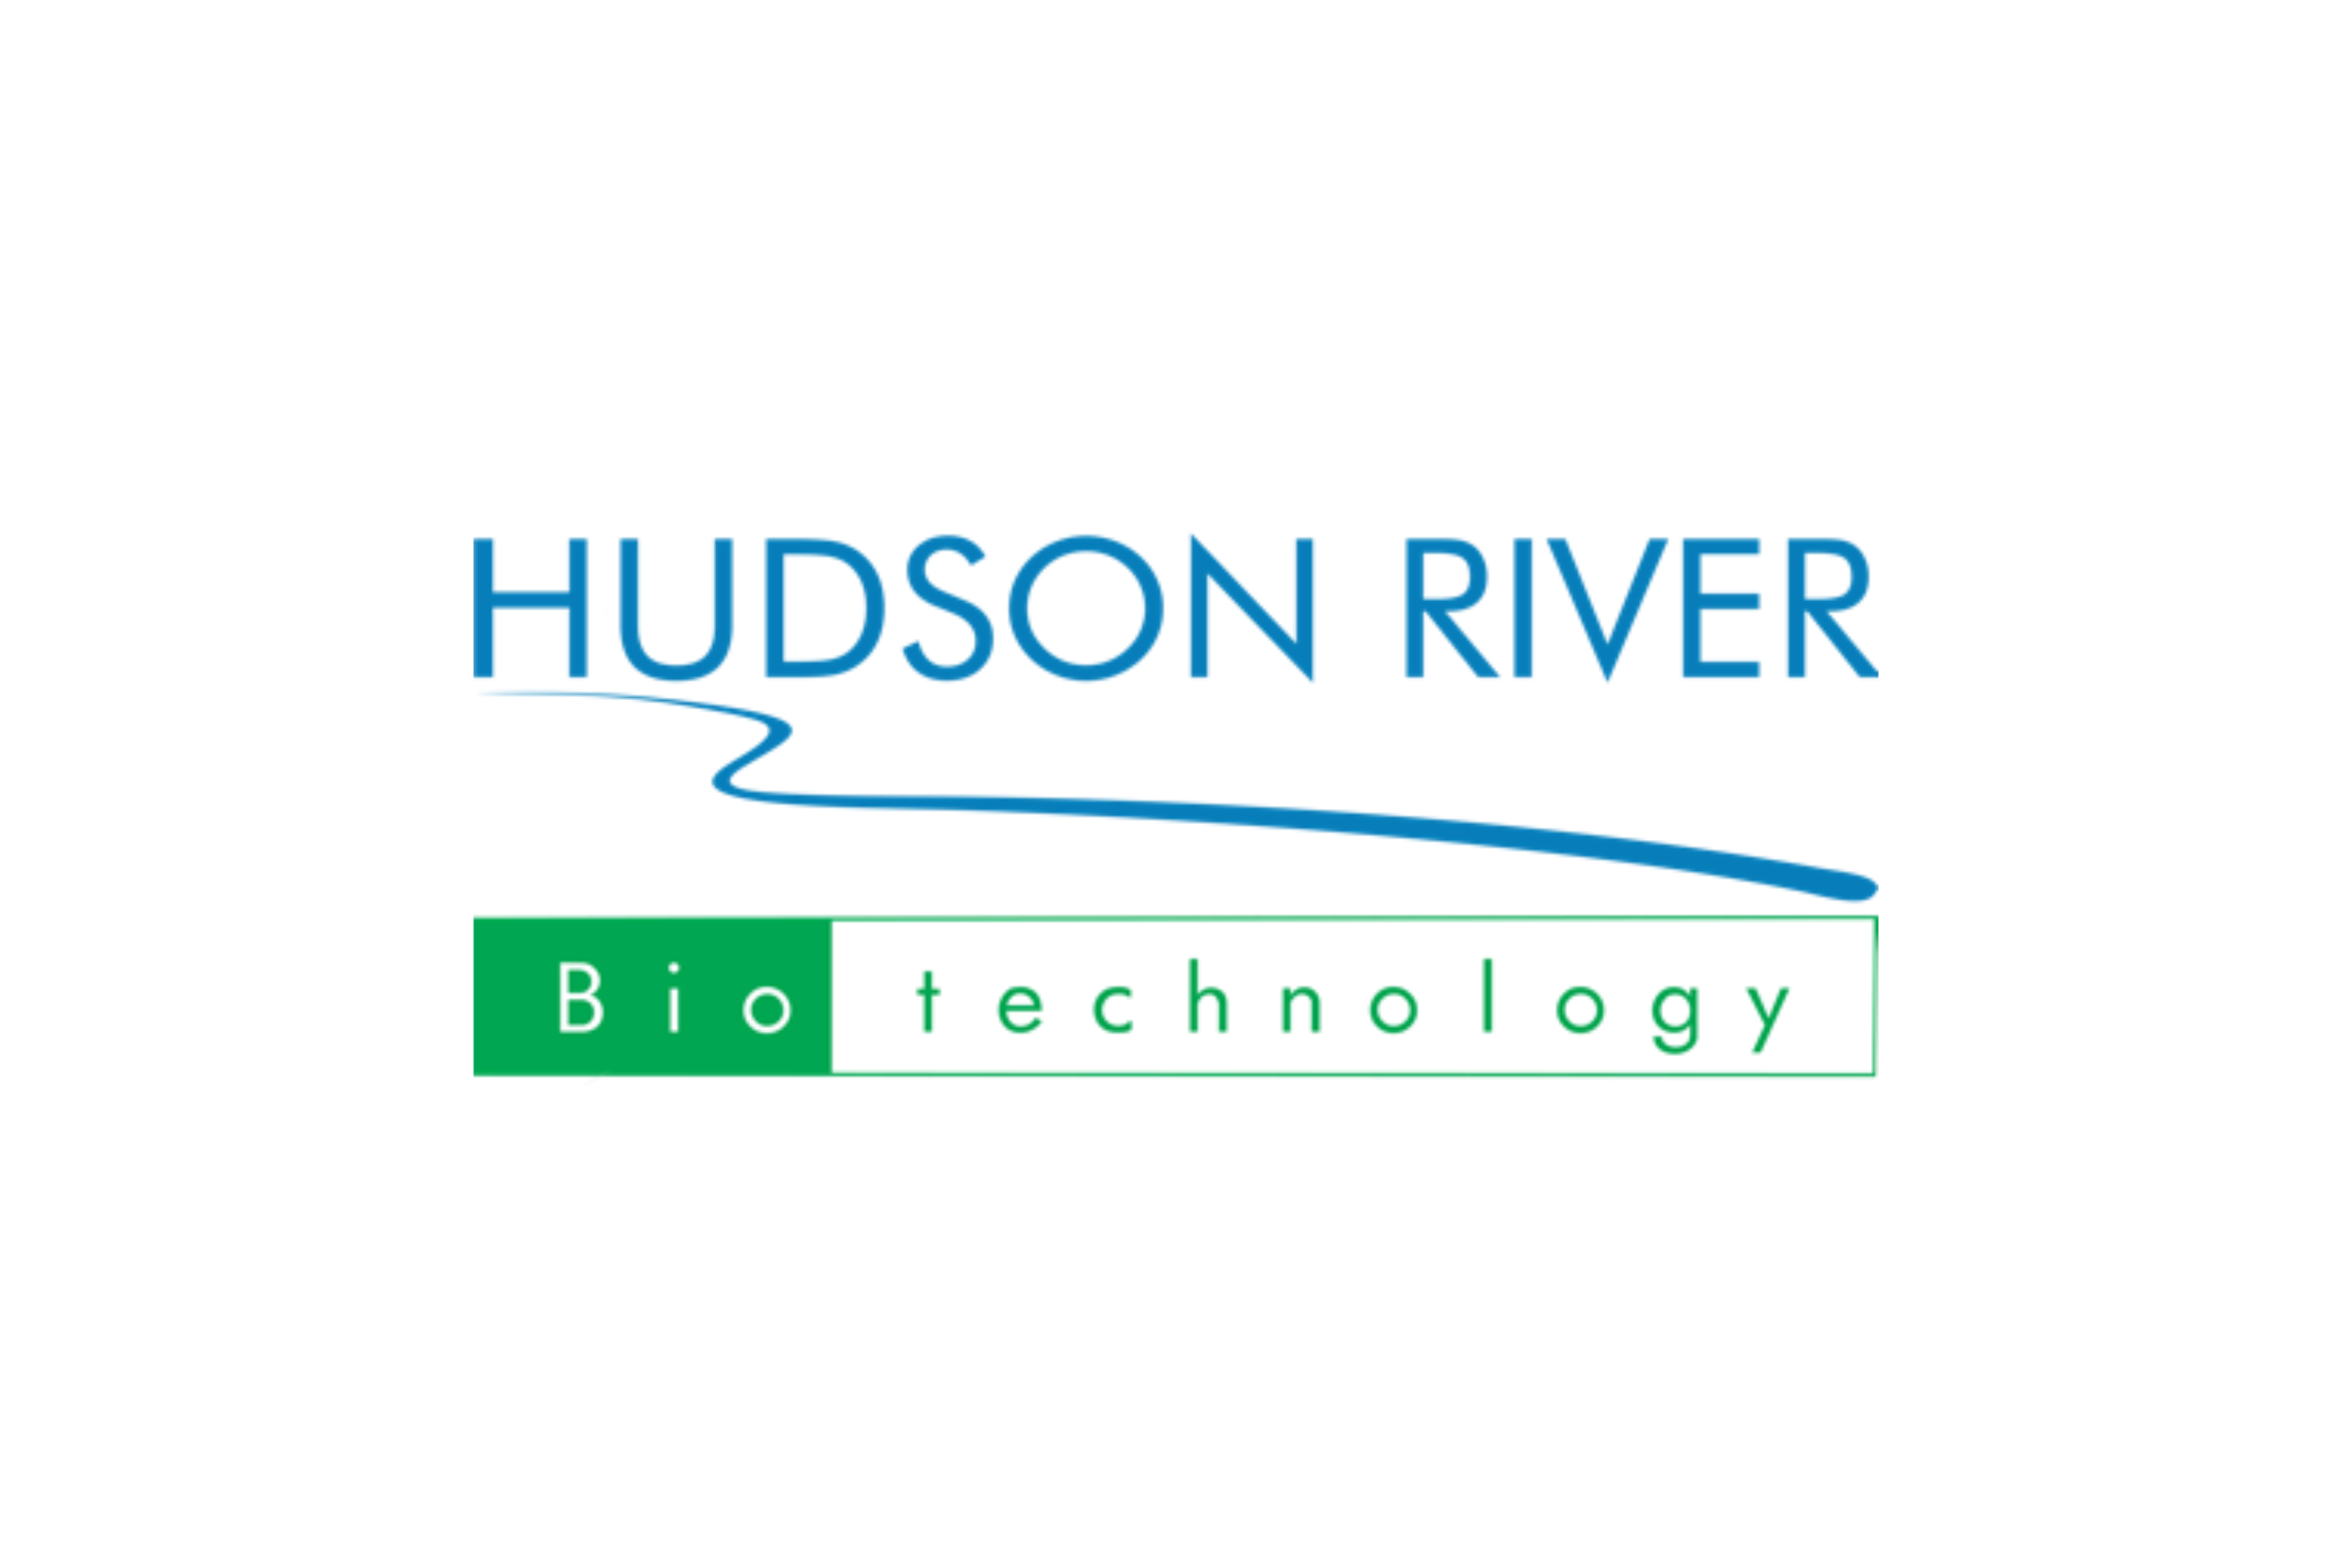 Hudson River Biotechnology